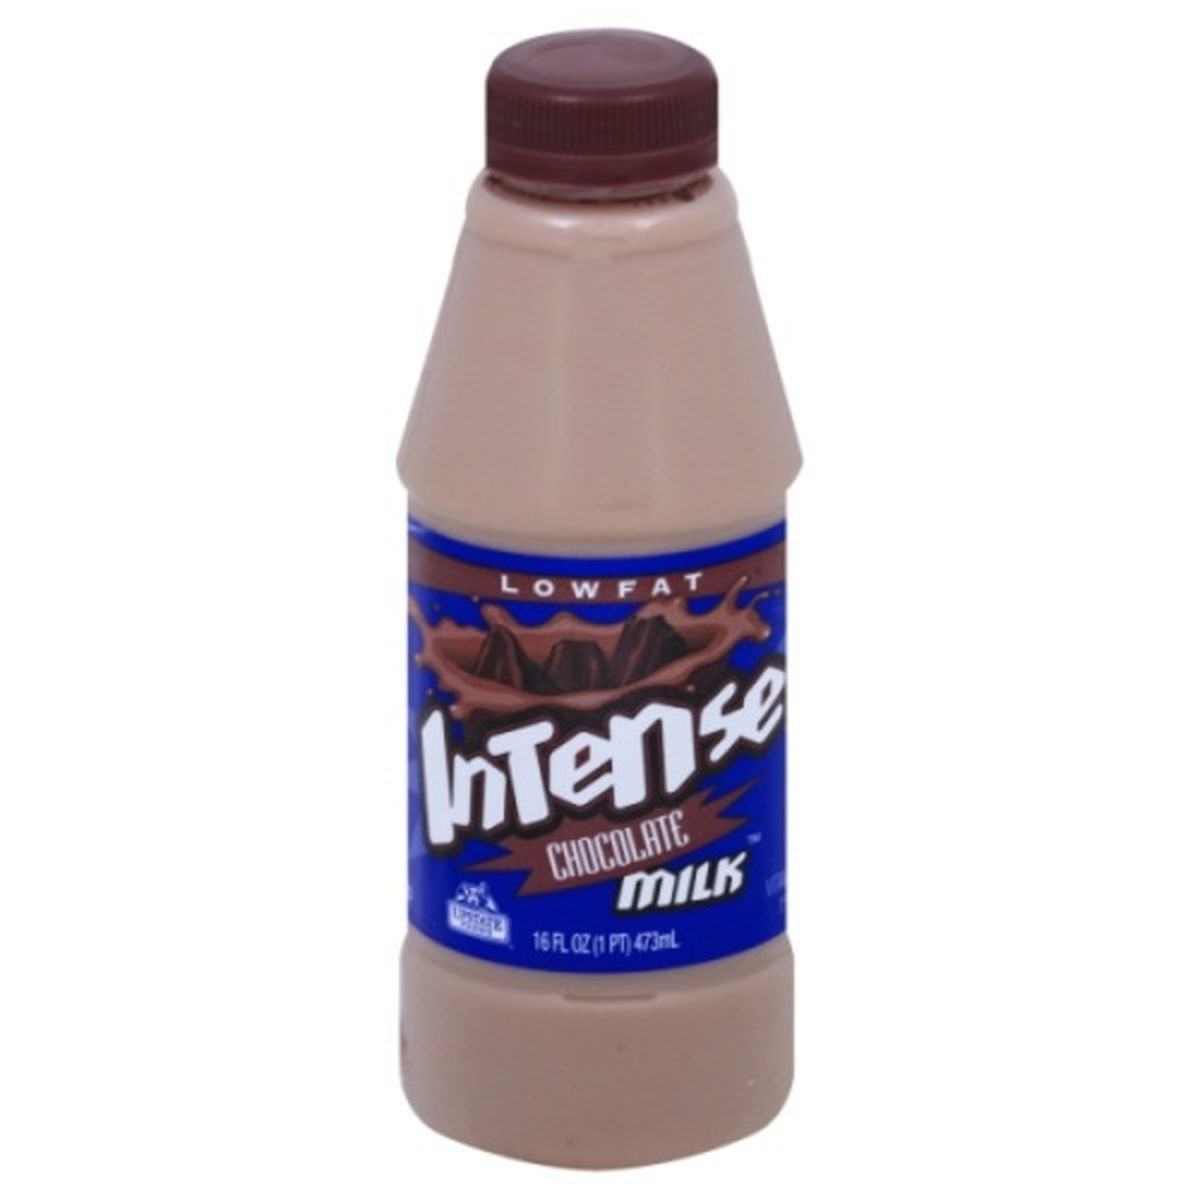 Calories in Upstate Farms Intense Milk, Lowfat, Chocolate, 1% Milkfat